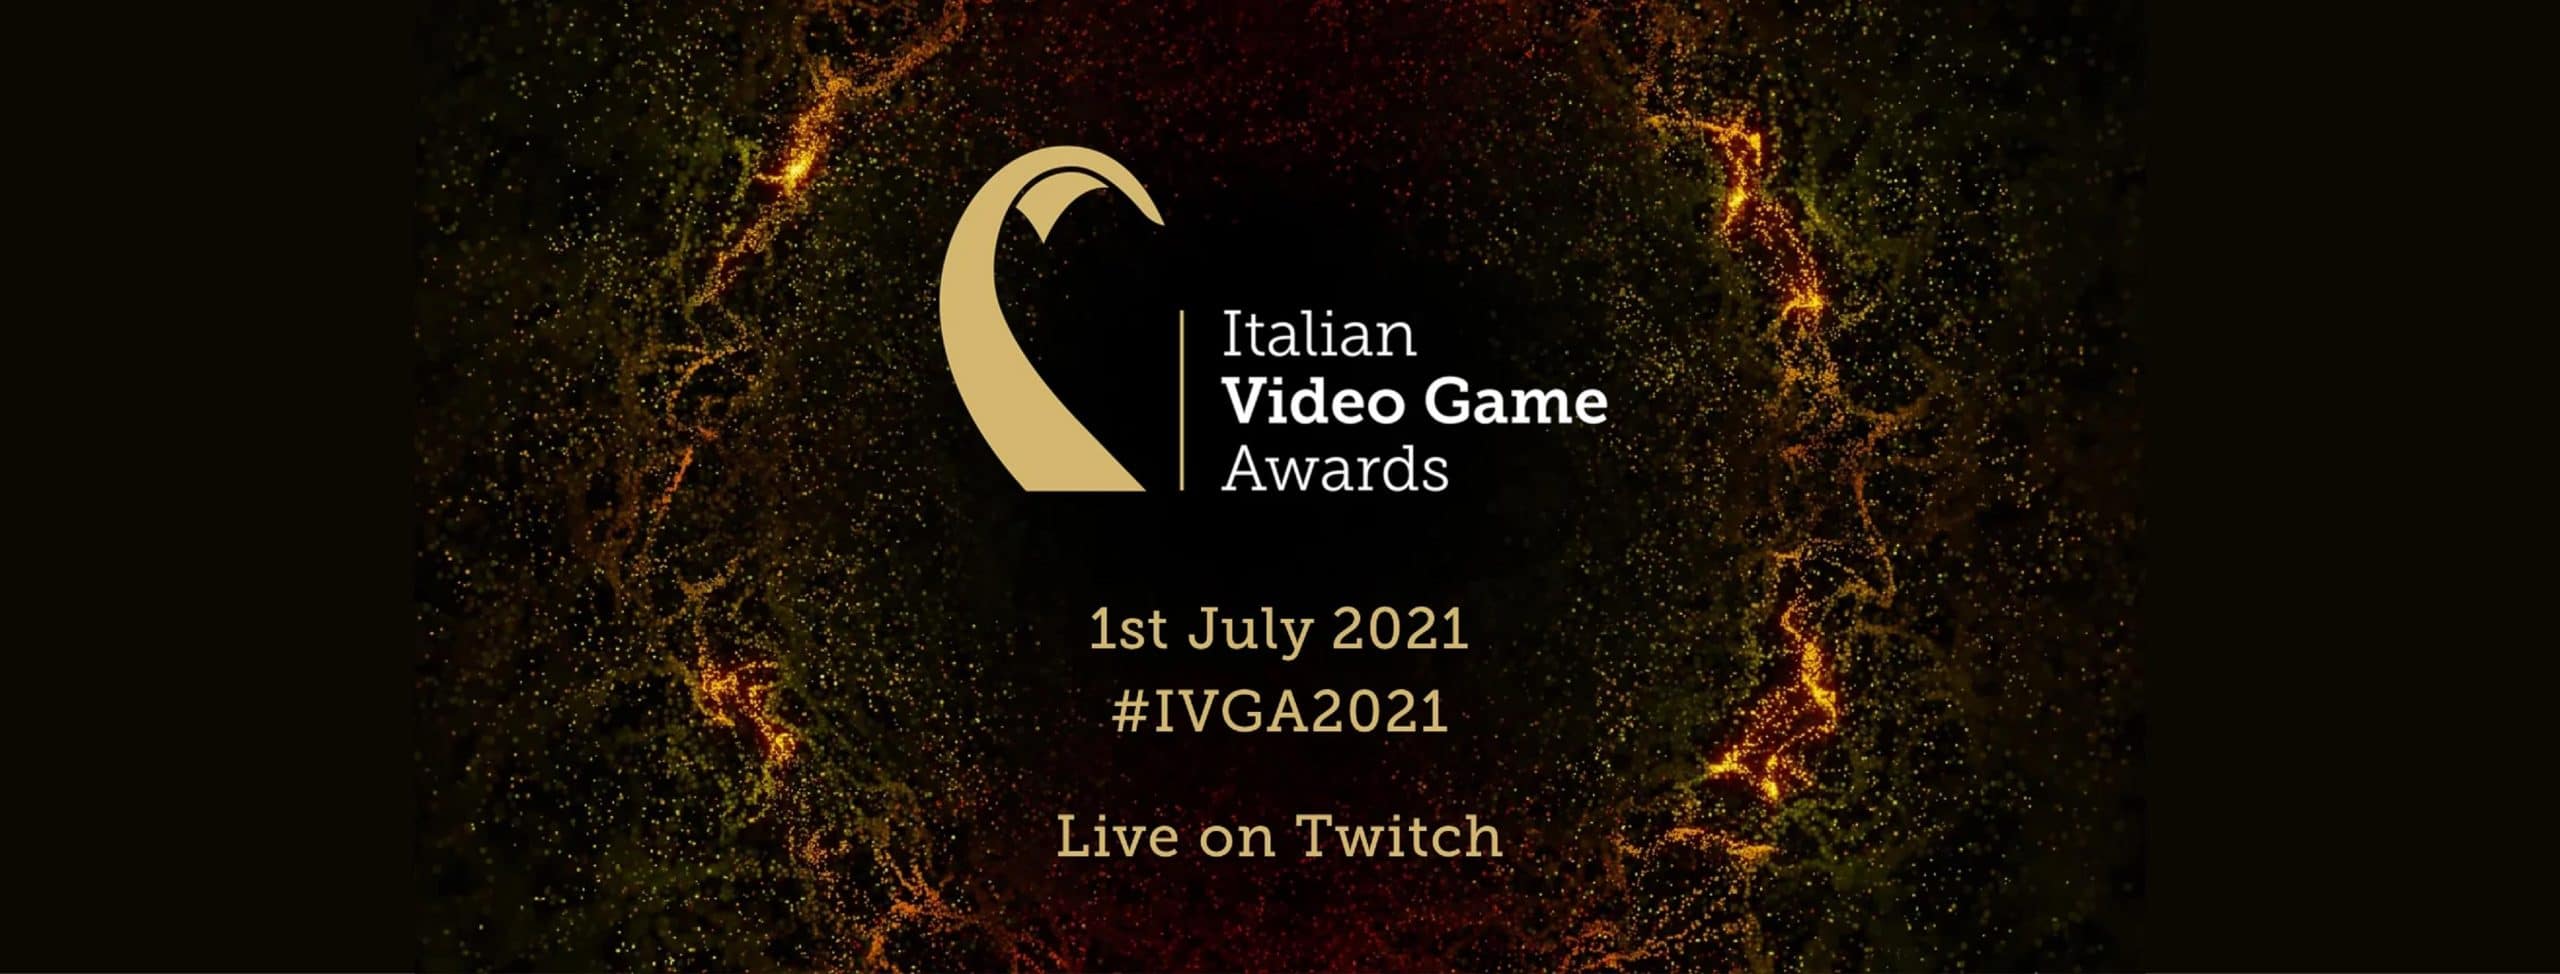 Italian Video Game Awards 2021